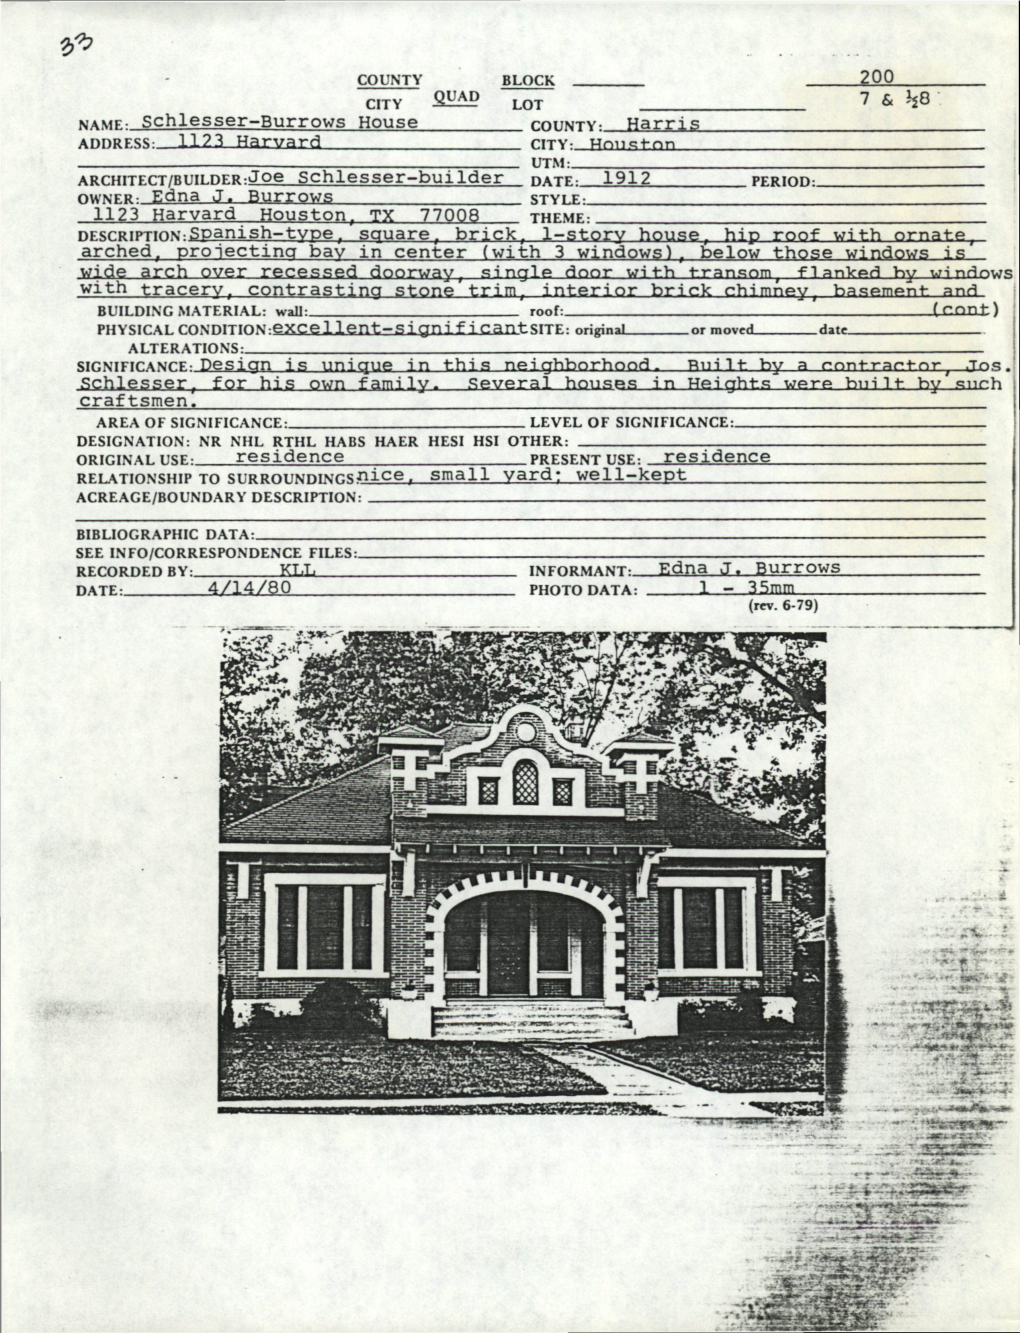 Schlesser-Burrows House 05/14/1984